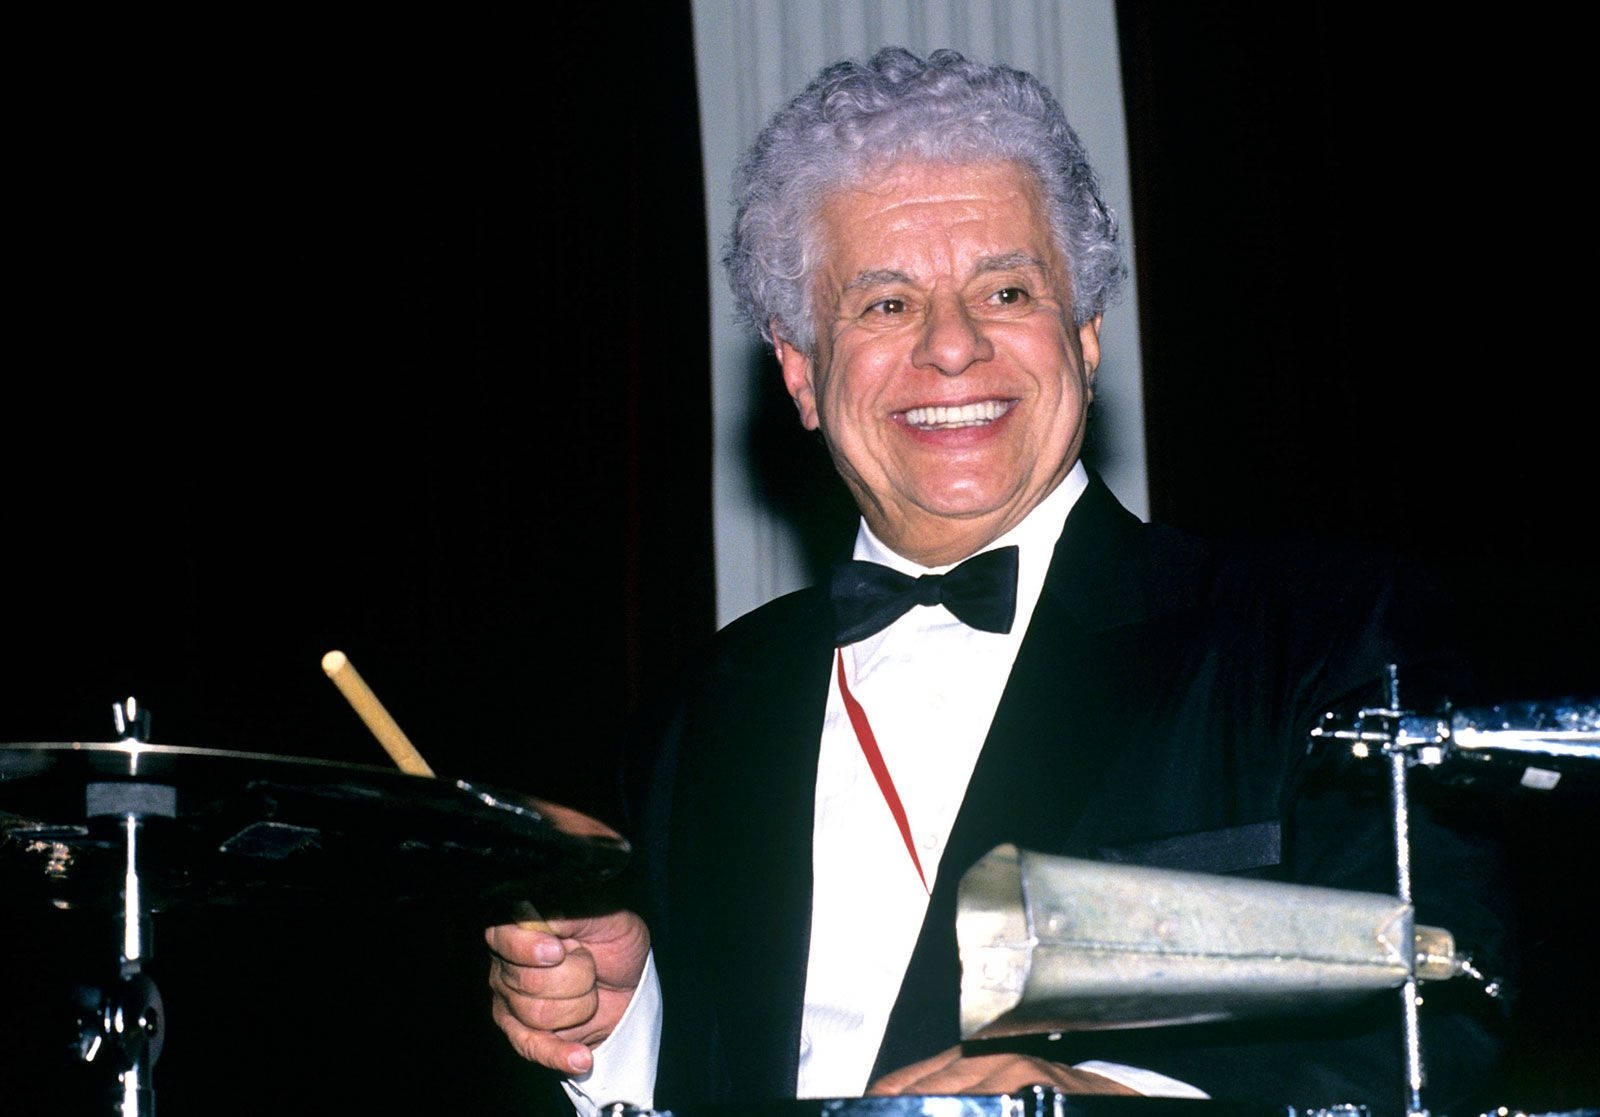 Tito Puente smiler mens han trommer. Wallpaper